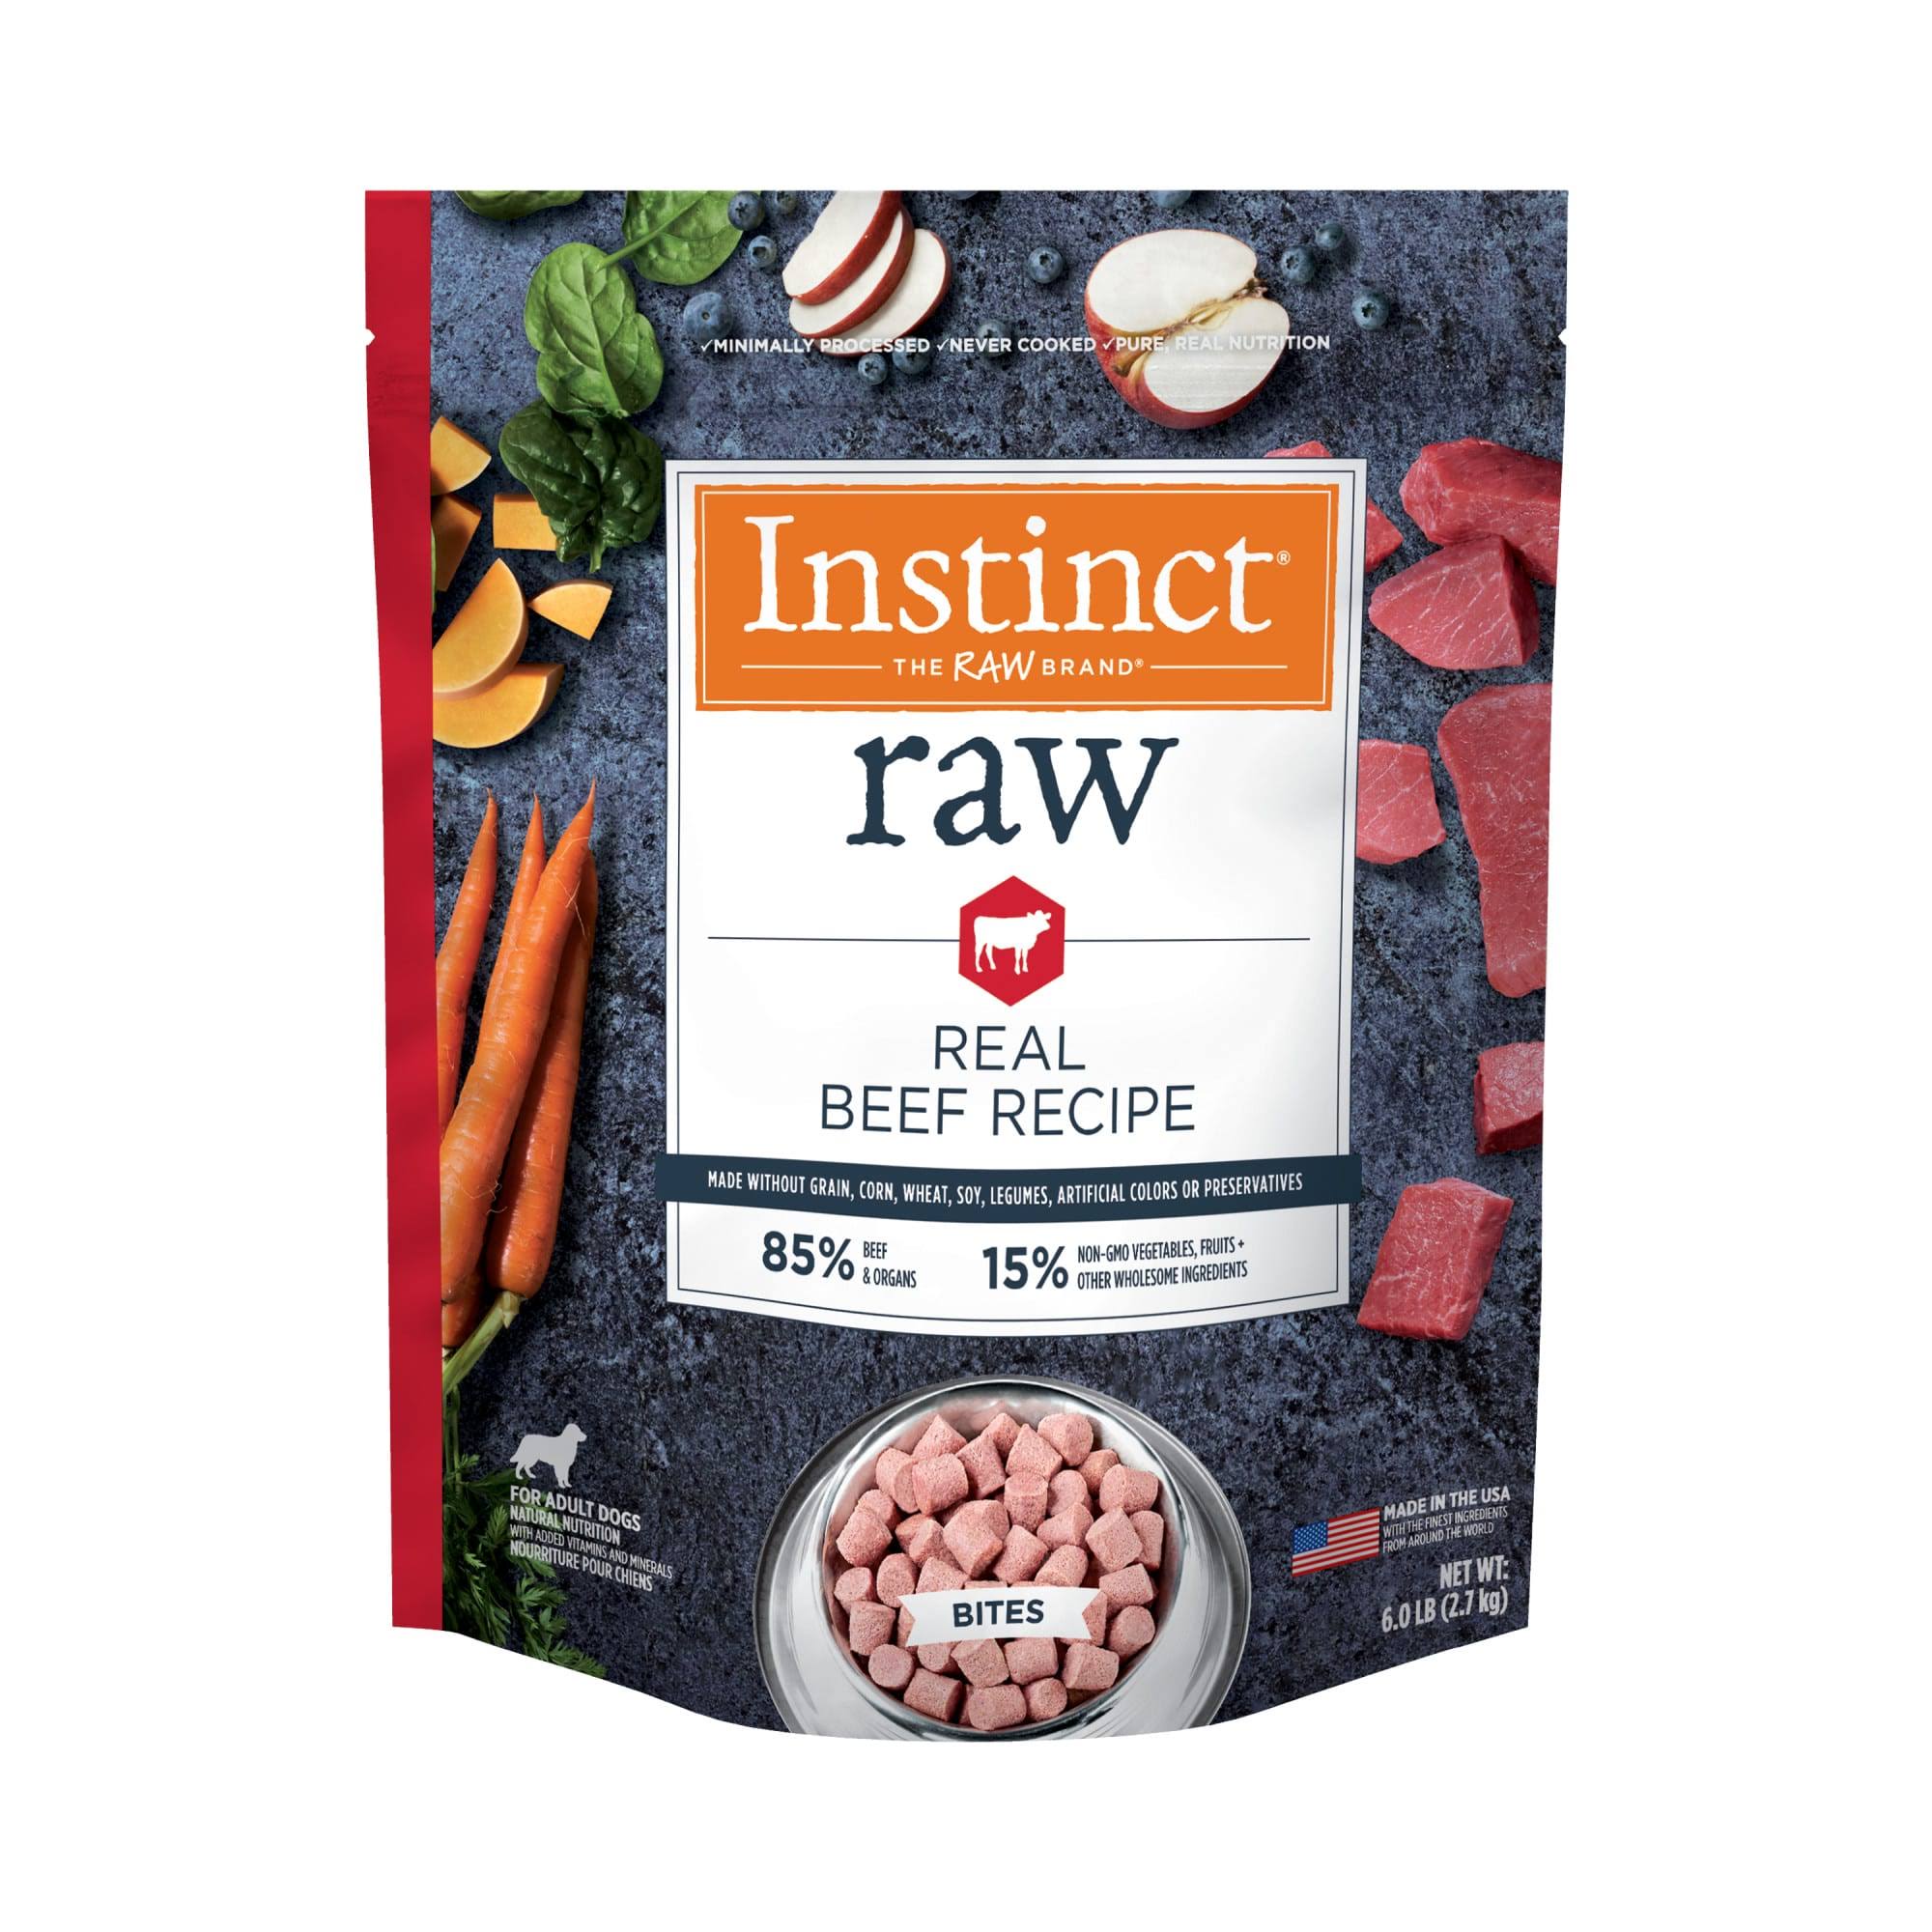 Instinct Frozen Raw Bites Grain-Free Real Beef Recipe Dog Food, 6 lbs.